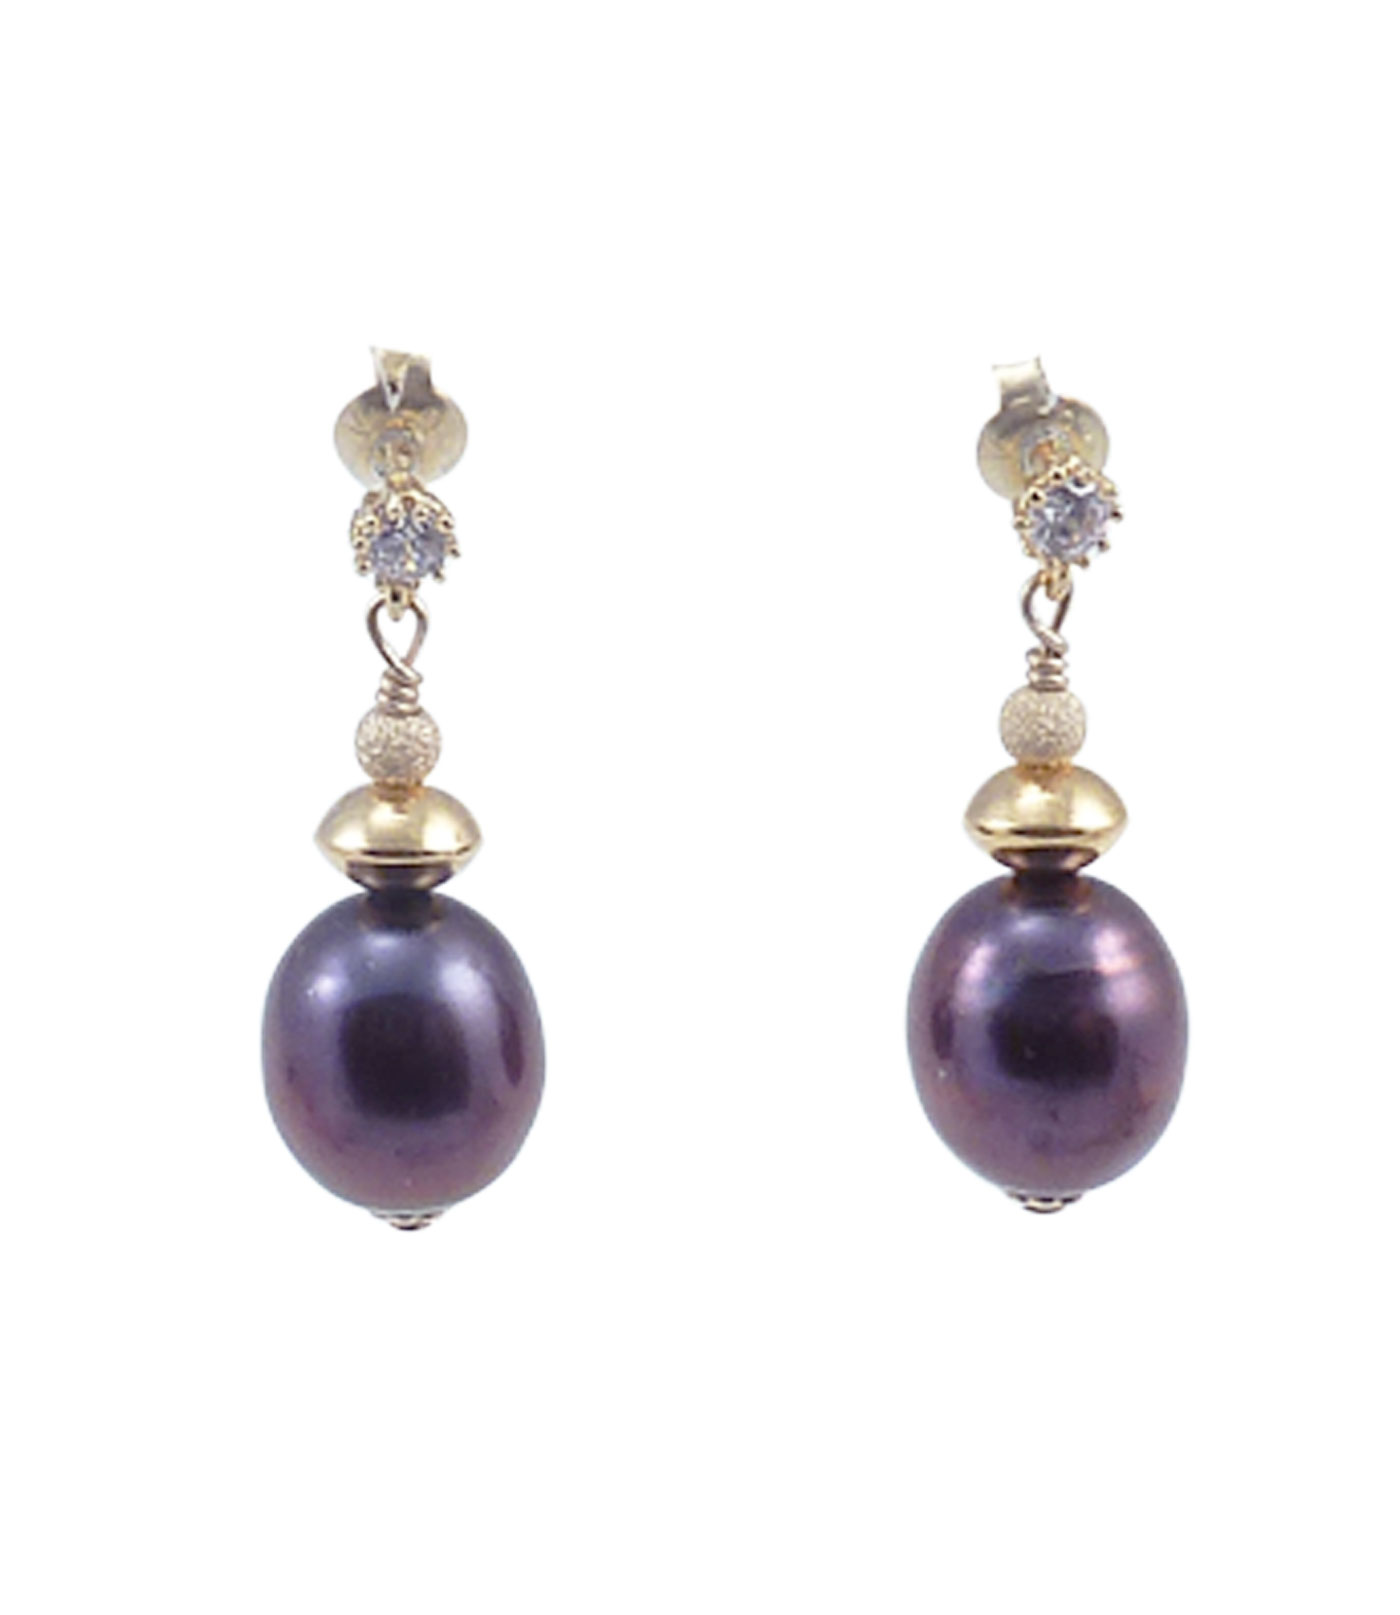 Pearl earrings oval black pearls. Modern pearl jewelry